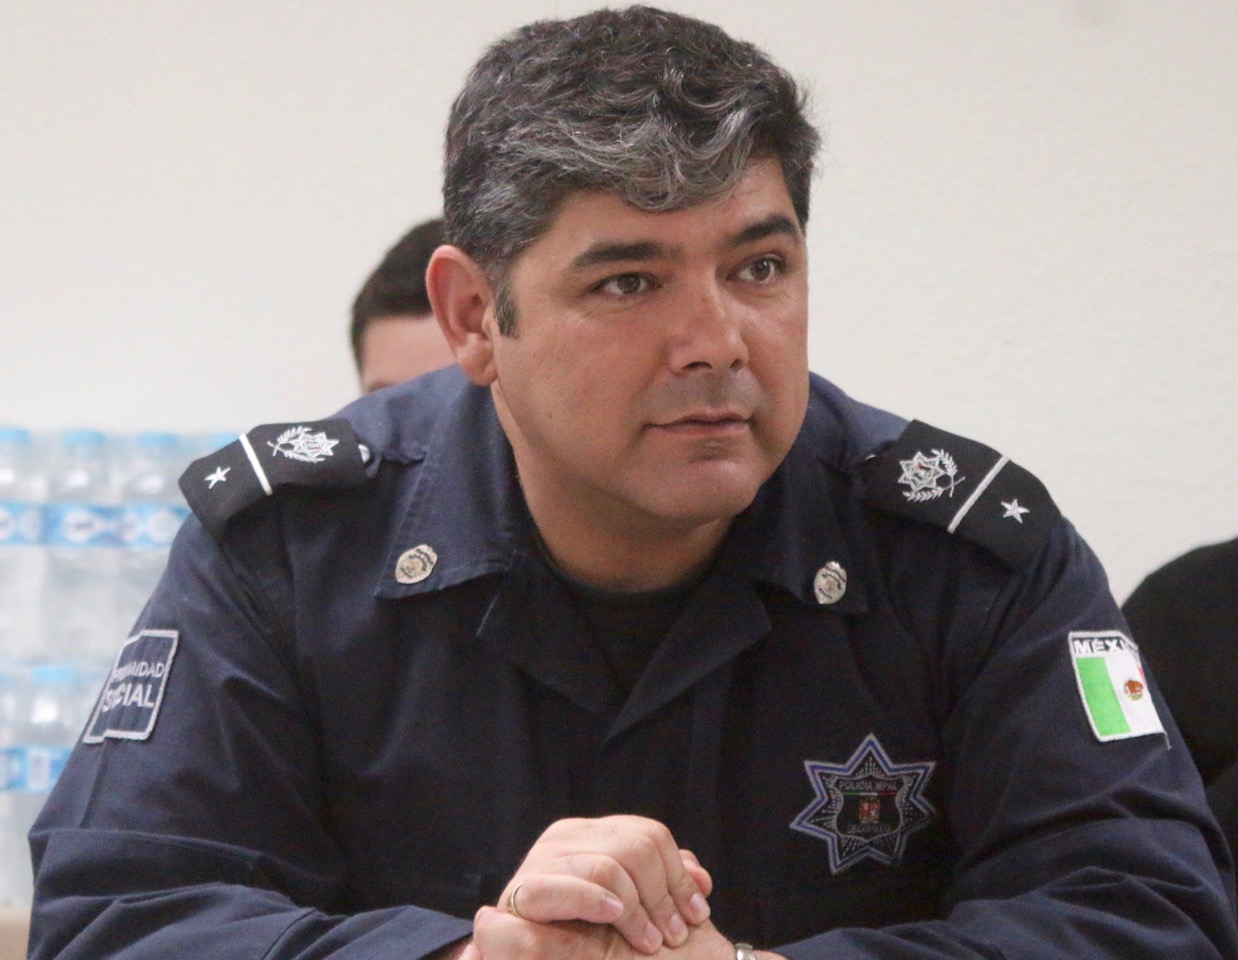  DGSPM no solapará mal actuar de policías, dice Jiménez Arcadia por video de riña entre policías y civiles